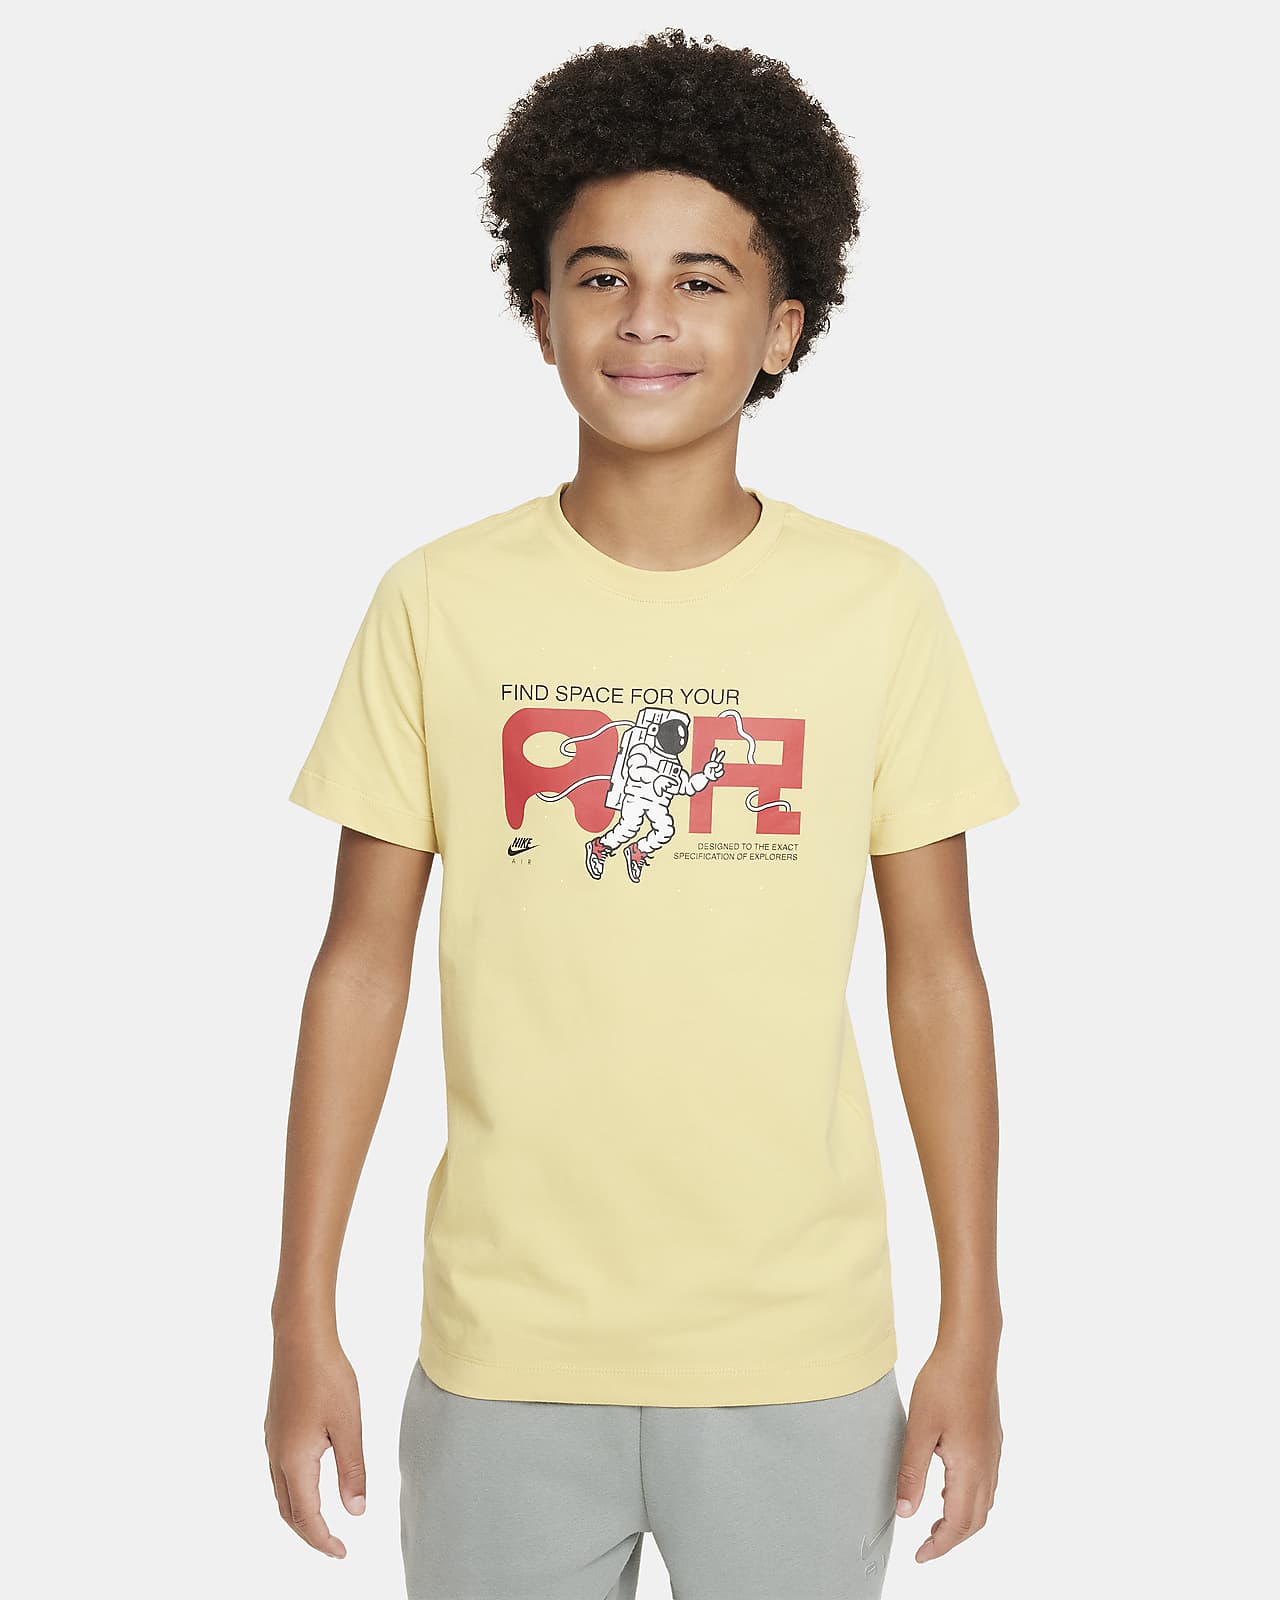 Nike Sportswear Big Kids' T-Shirt